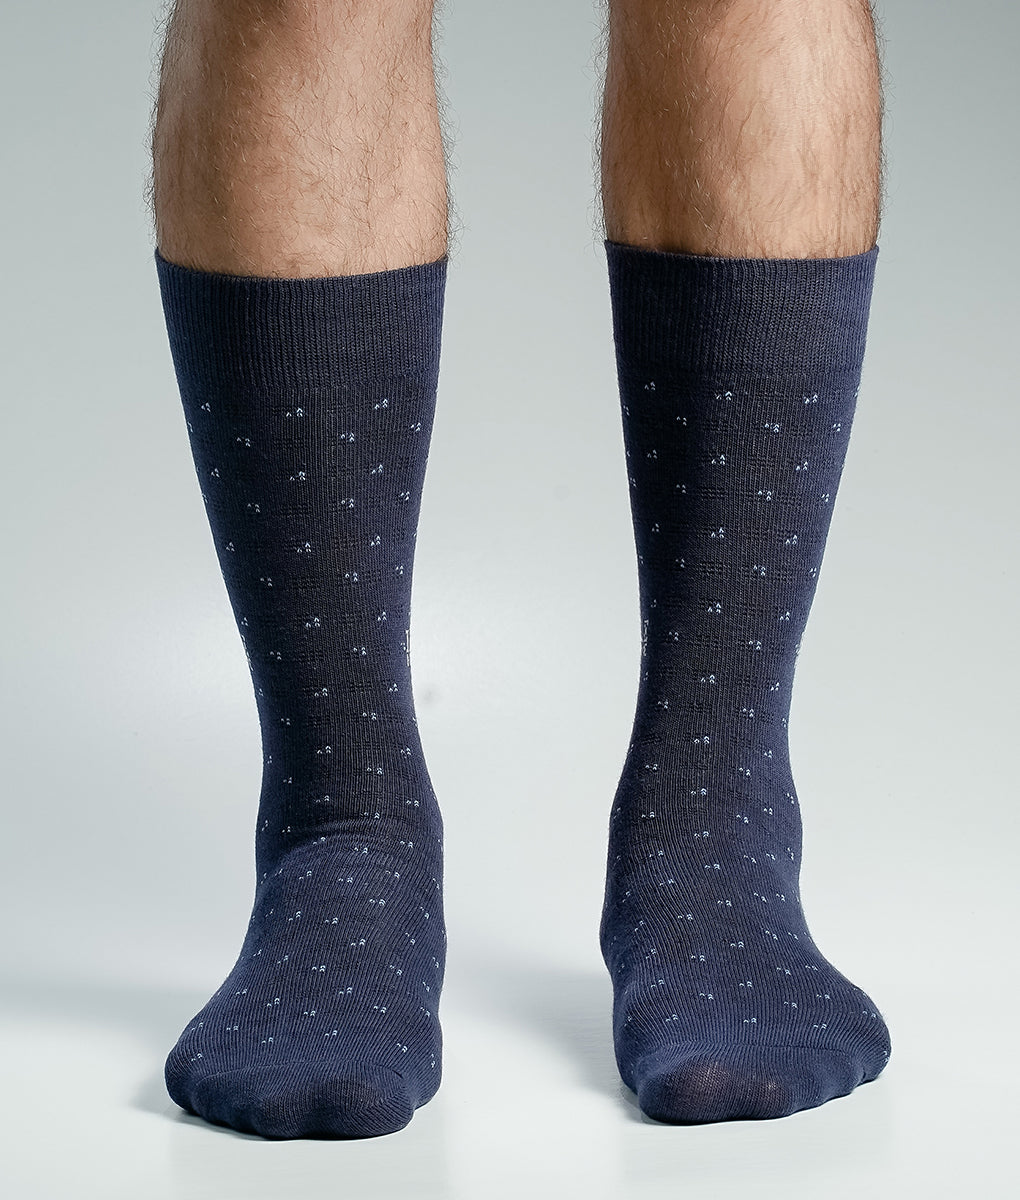 Action Long Socks for Men by MB Hosiery